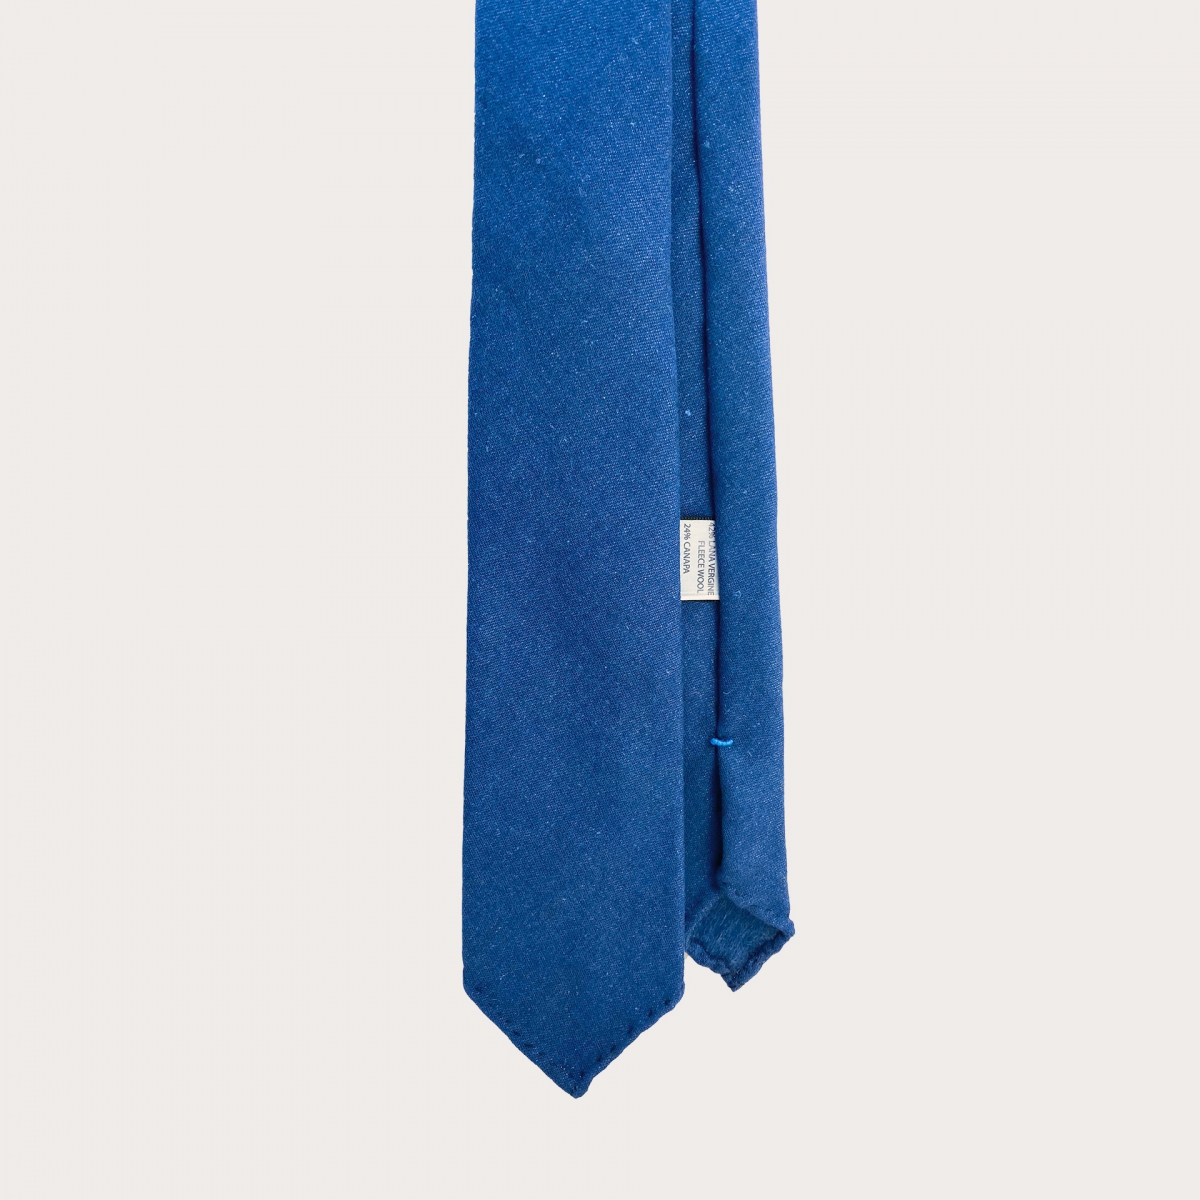 Cravatta sfoderata in lana e canapa, blu royal